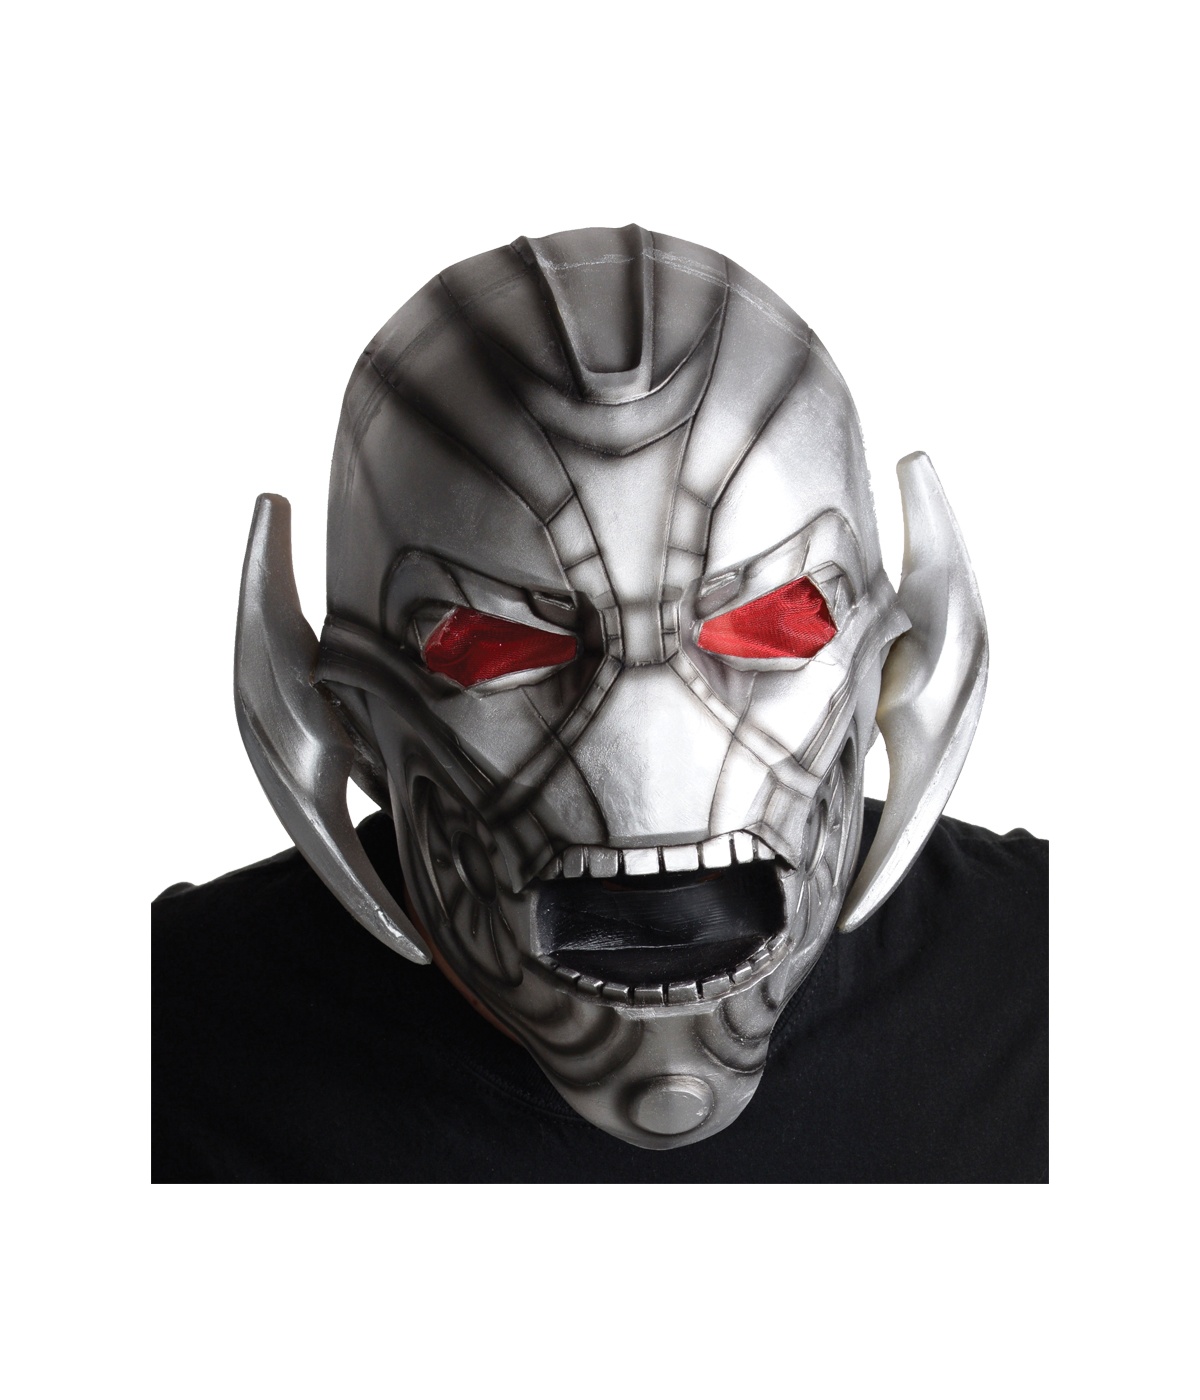  Age Ultron Latex Mask